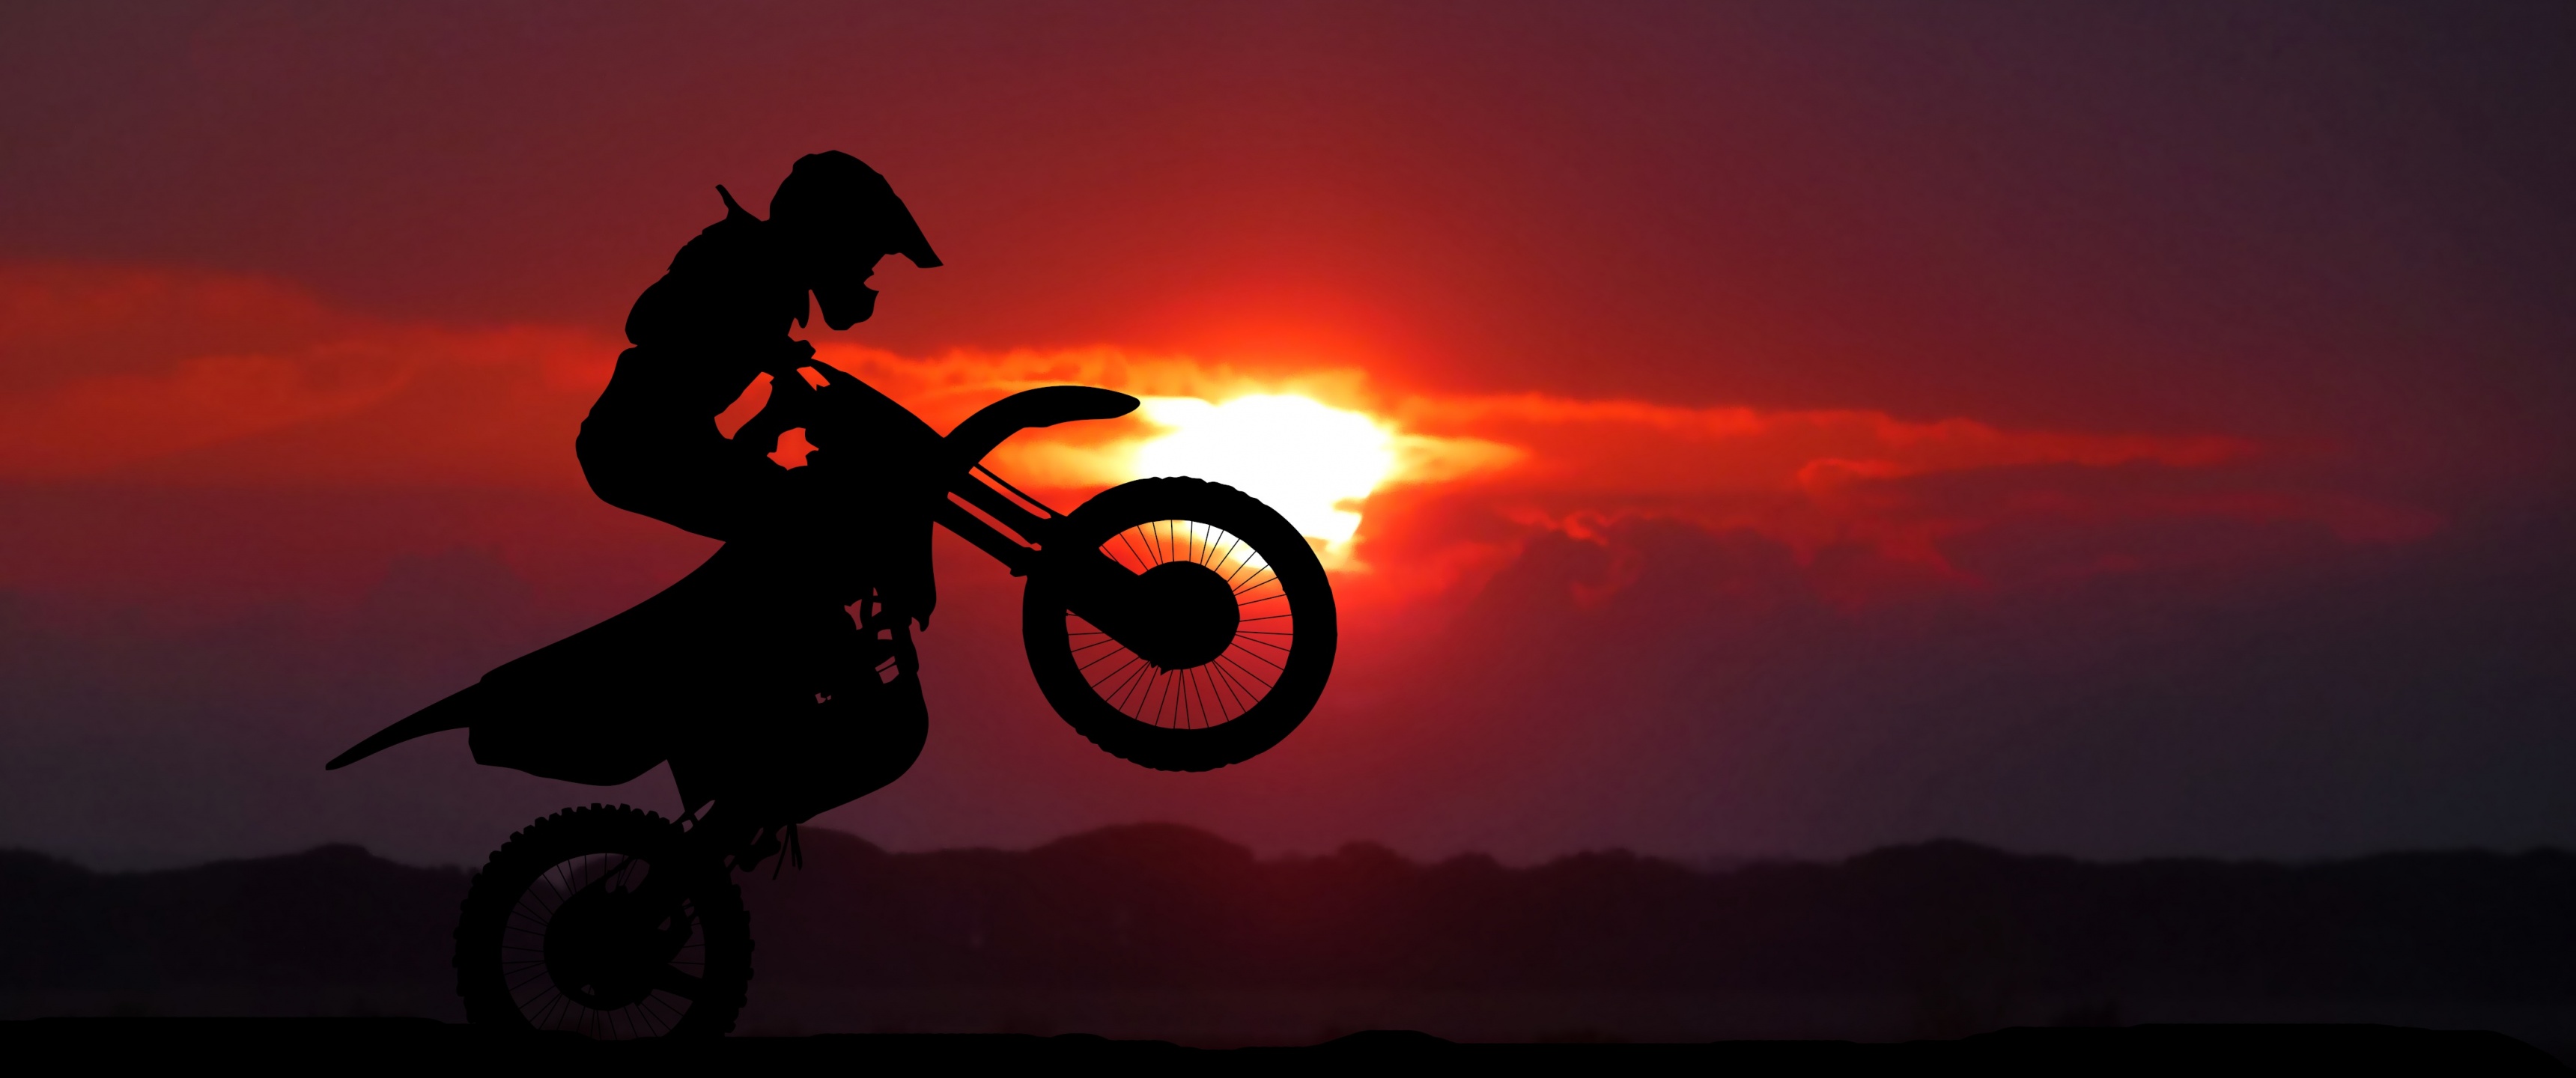 download the last version for windows Sunset Bike Racing - Motocross